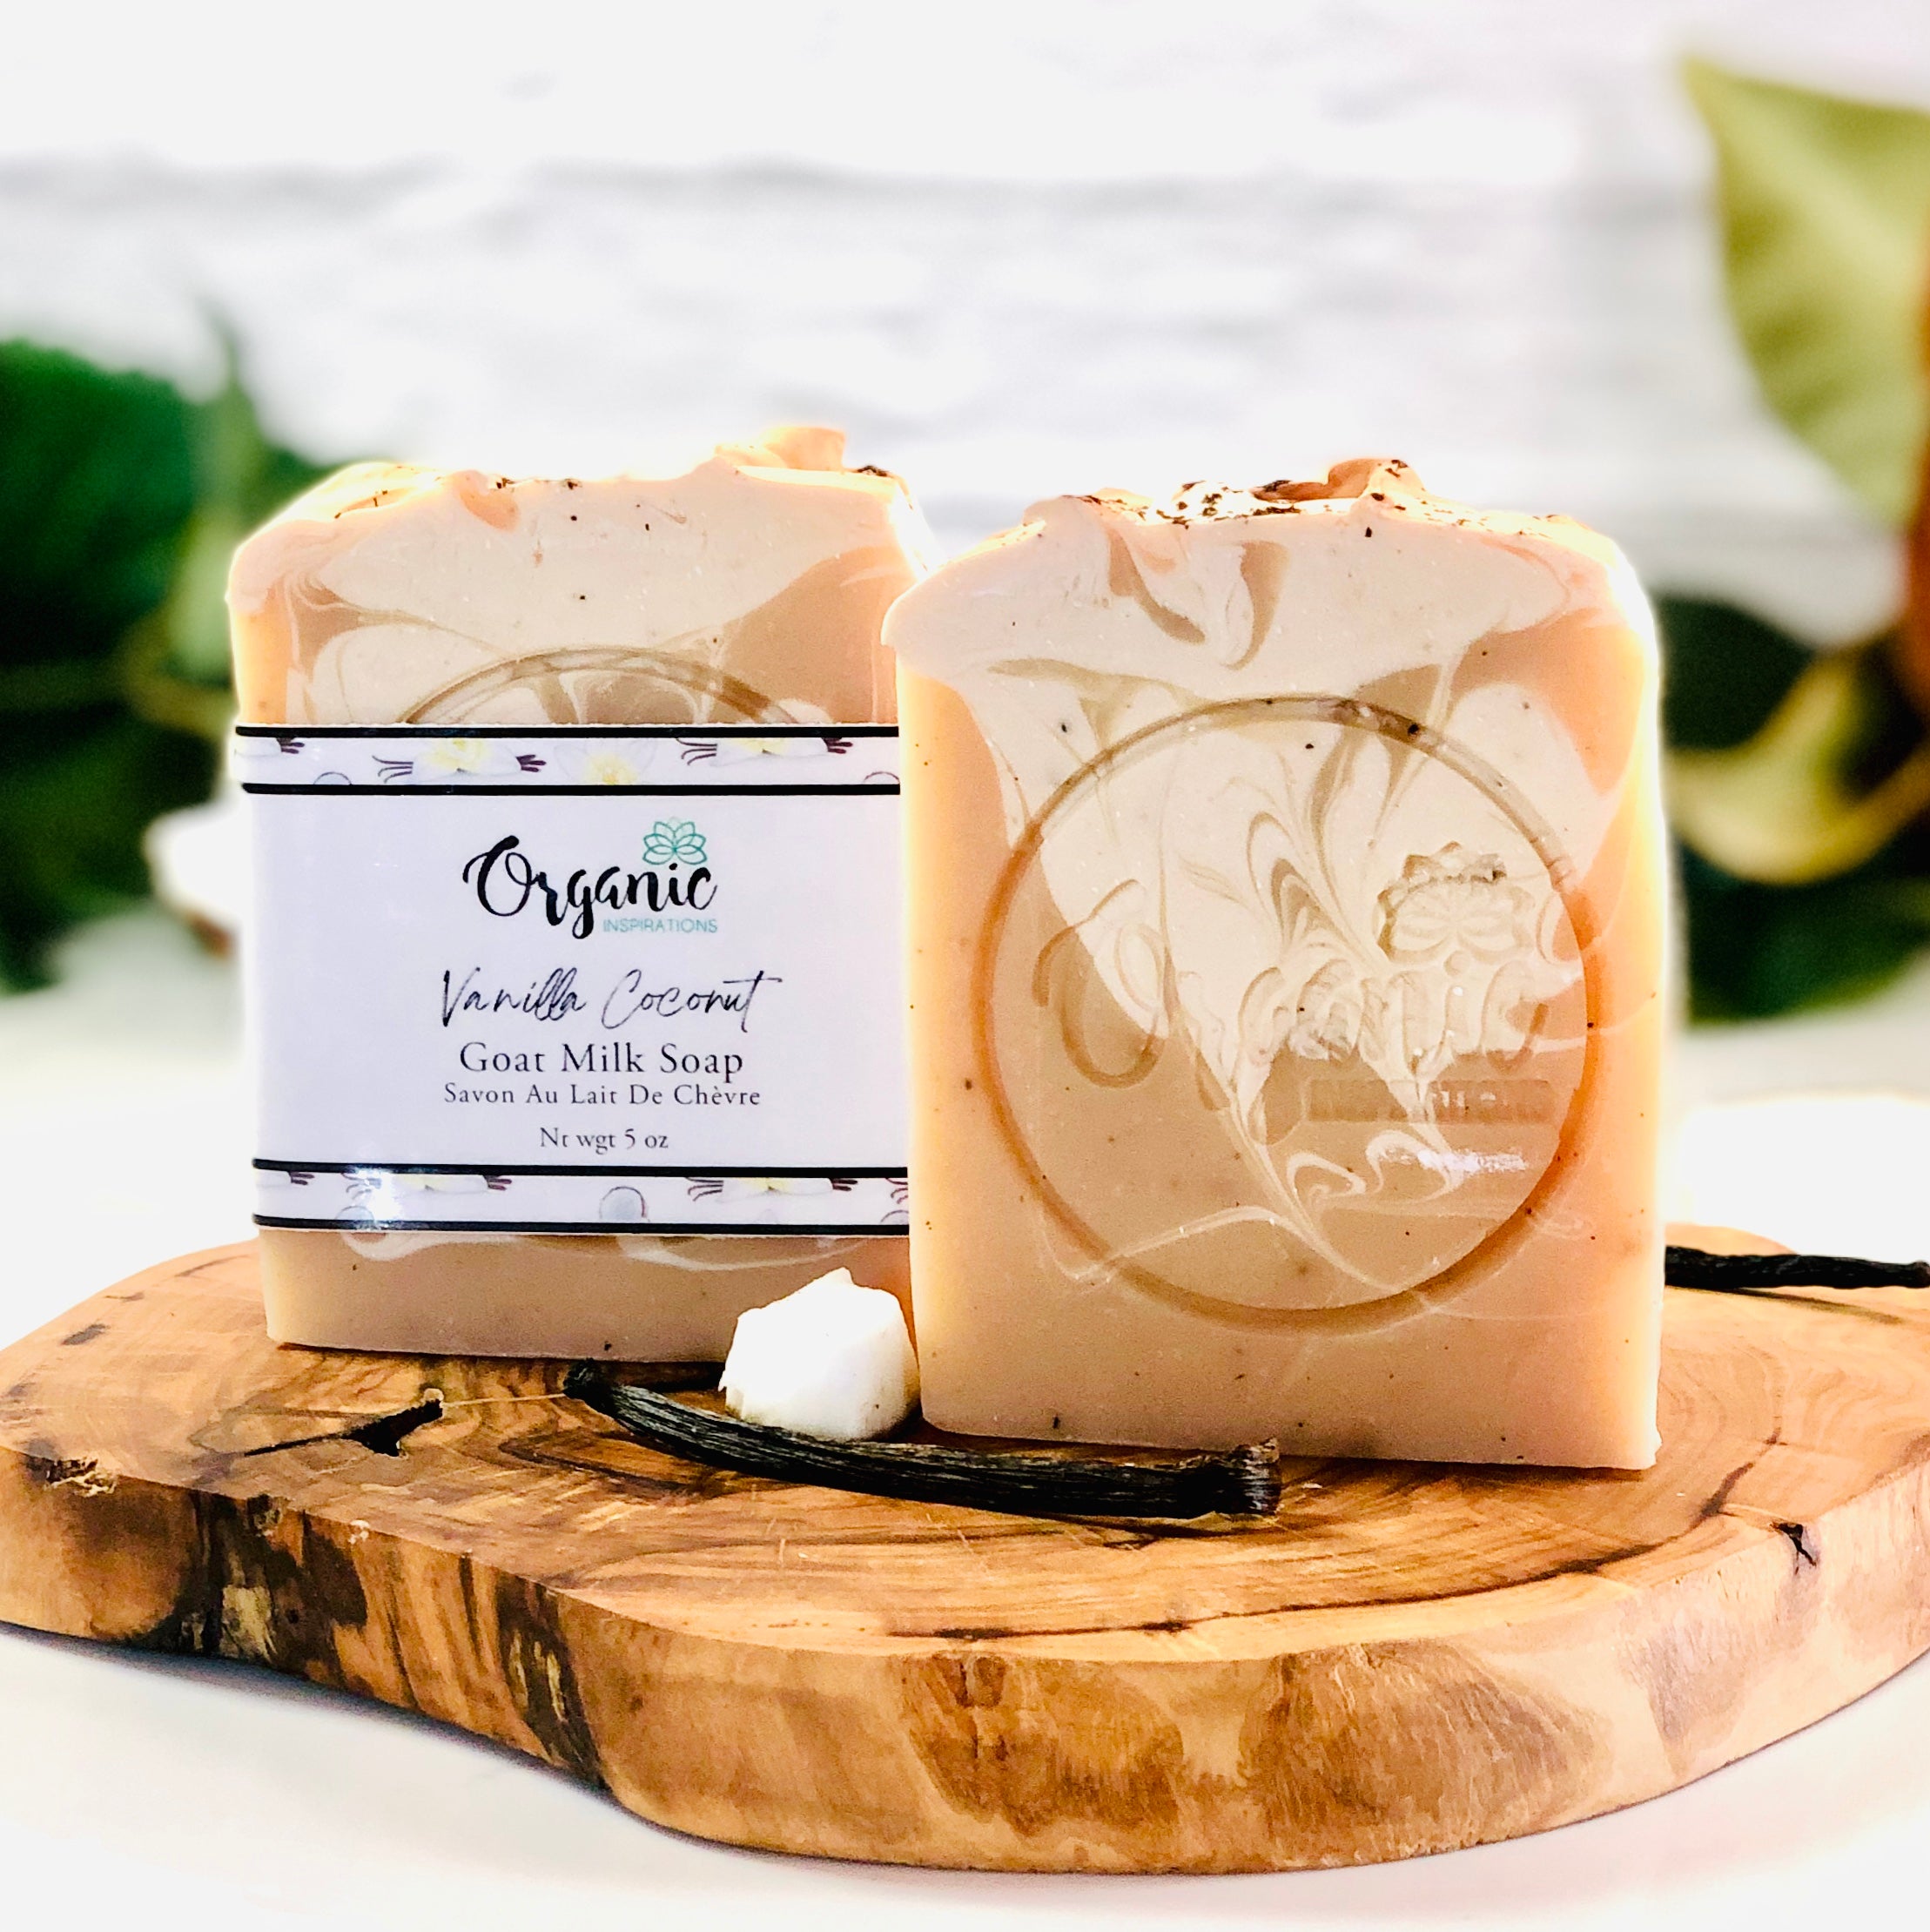 Vanilla Coconut Milk Soap Organic inspirations